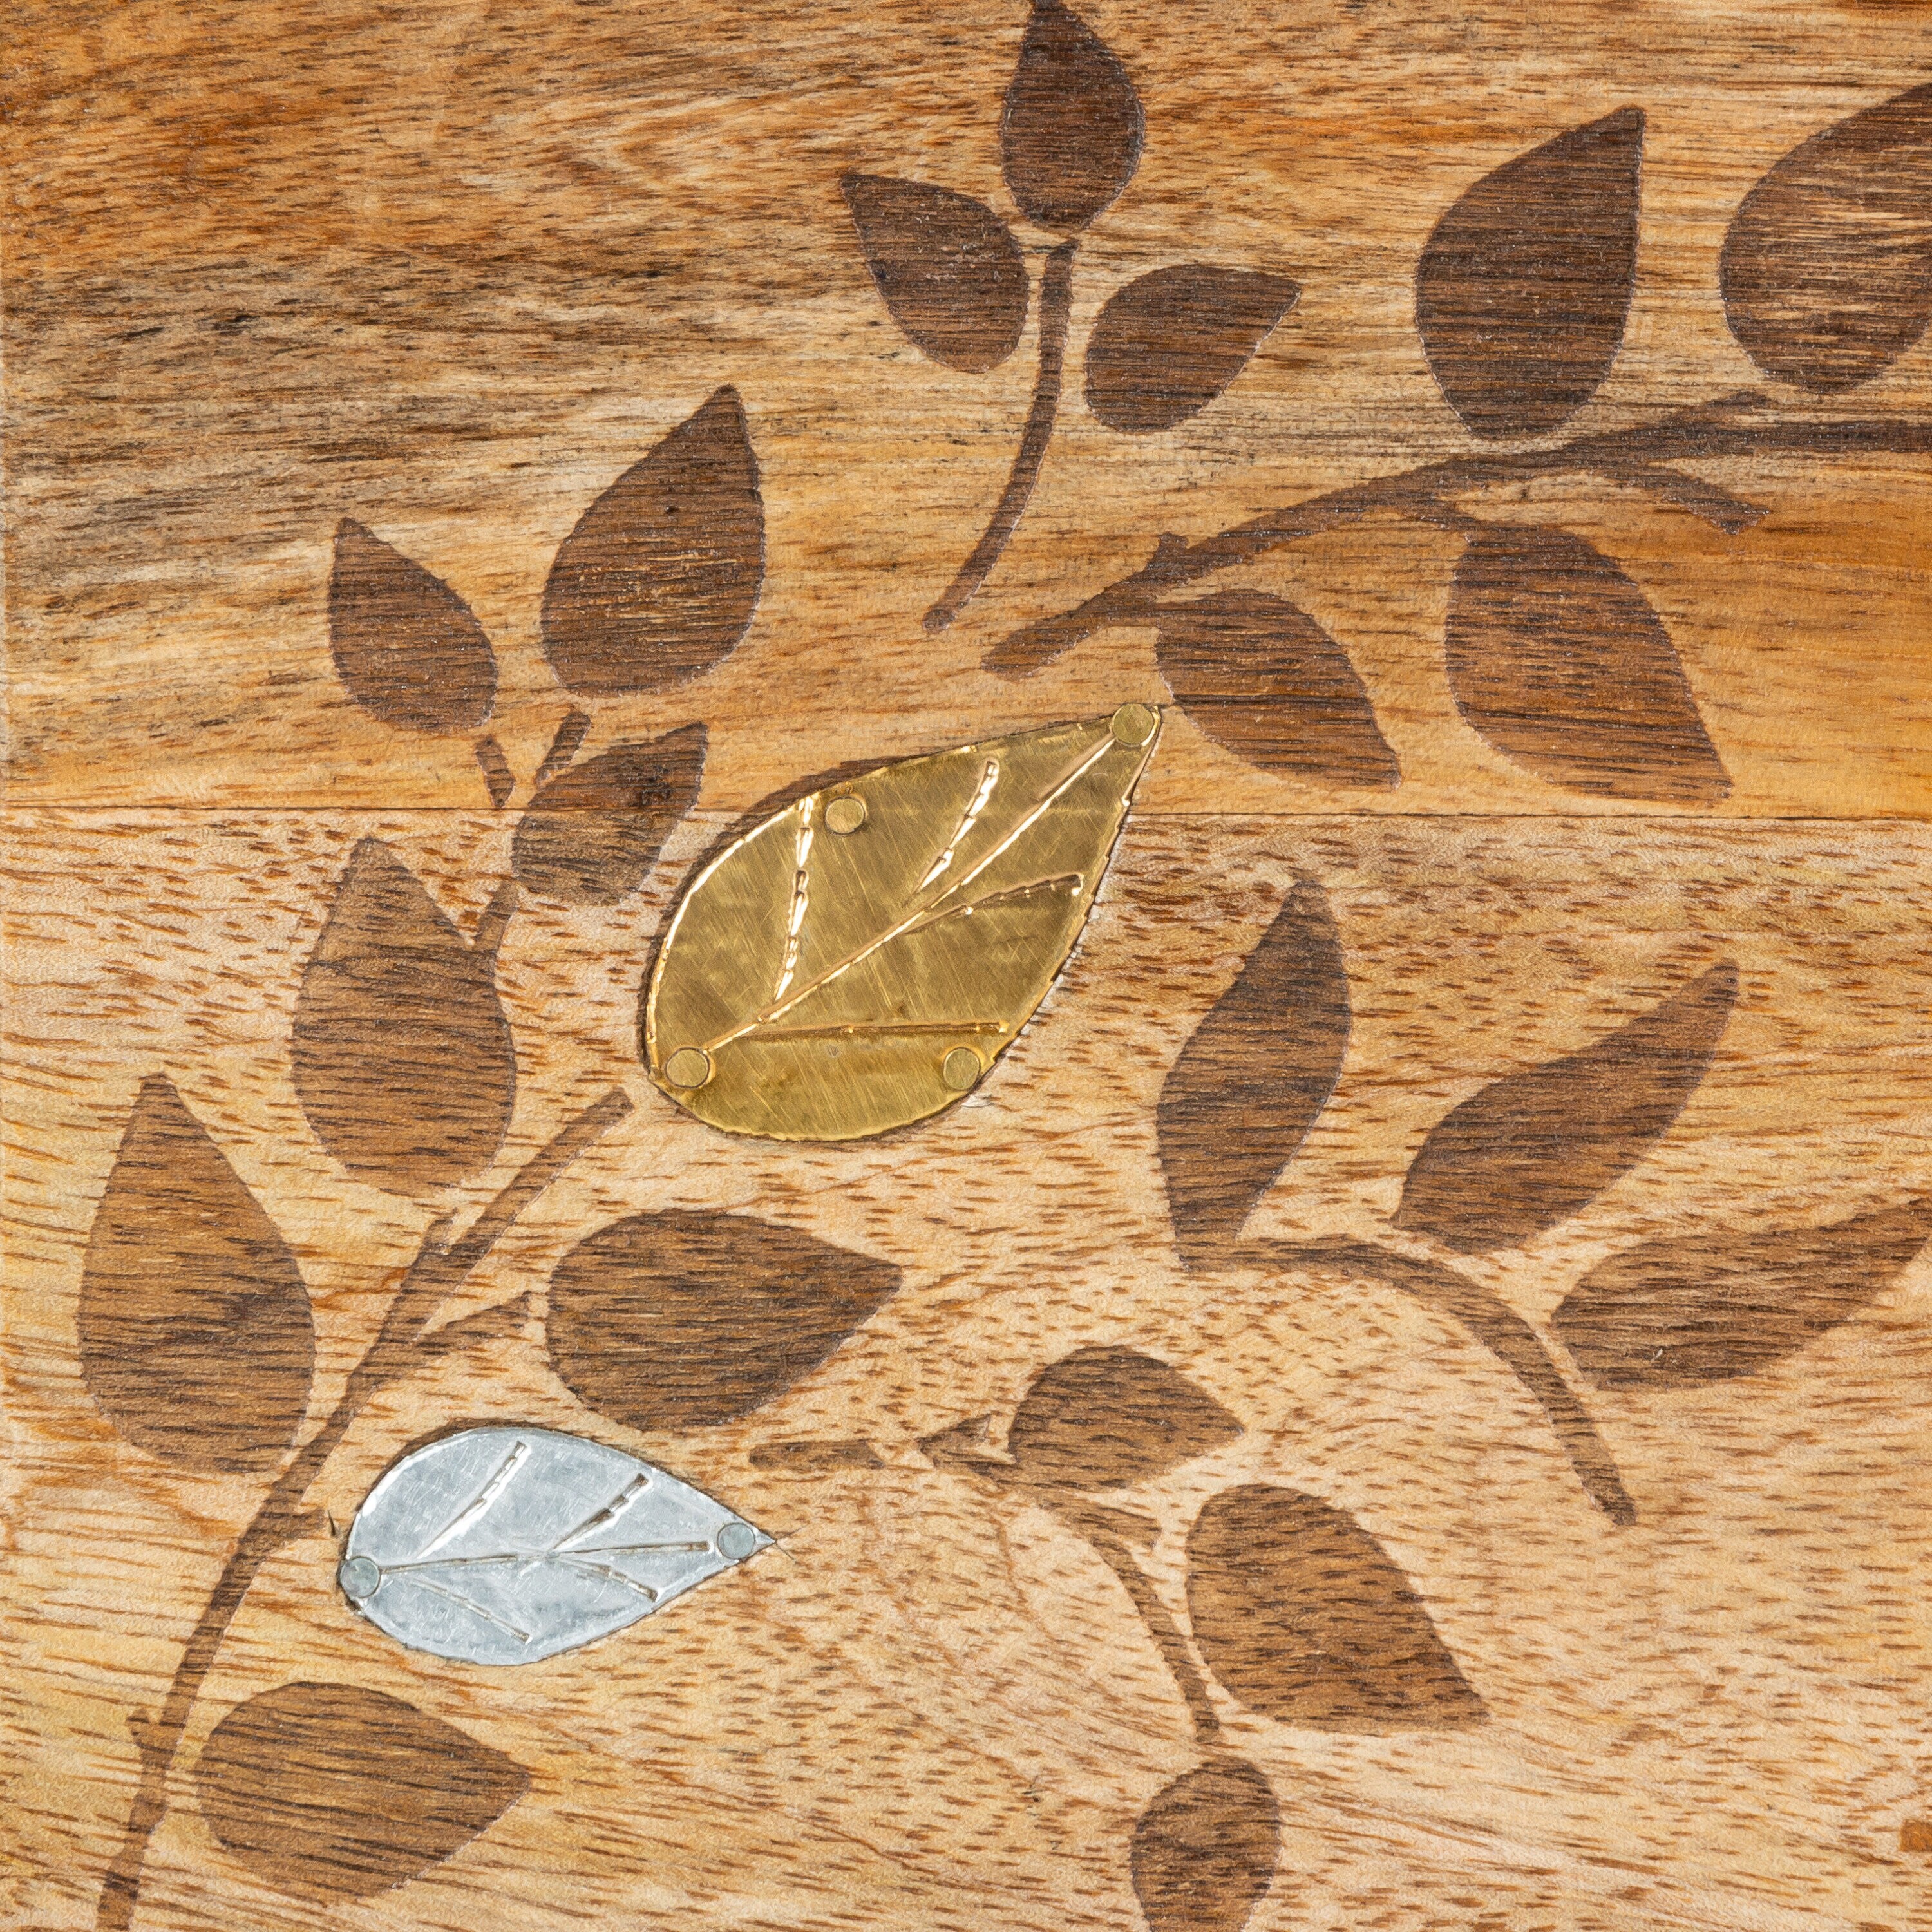 Utensil Holder, Mango Wood with Inlay/Laser Leaf Design